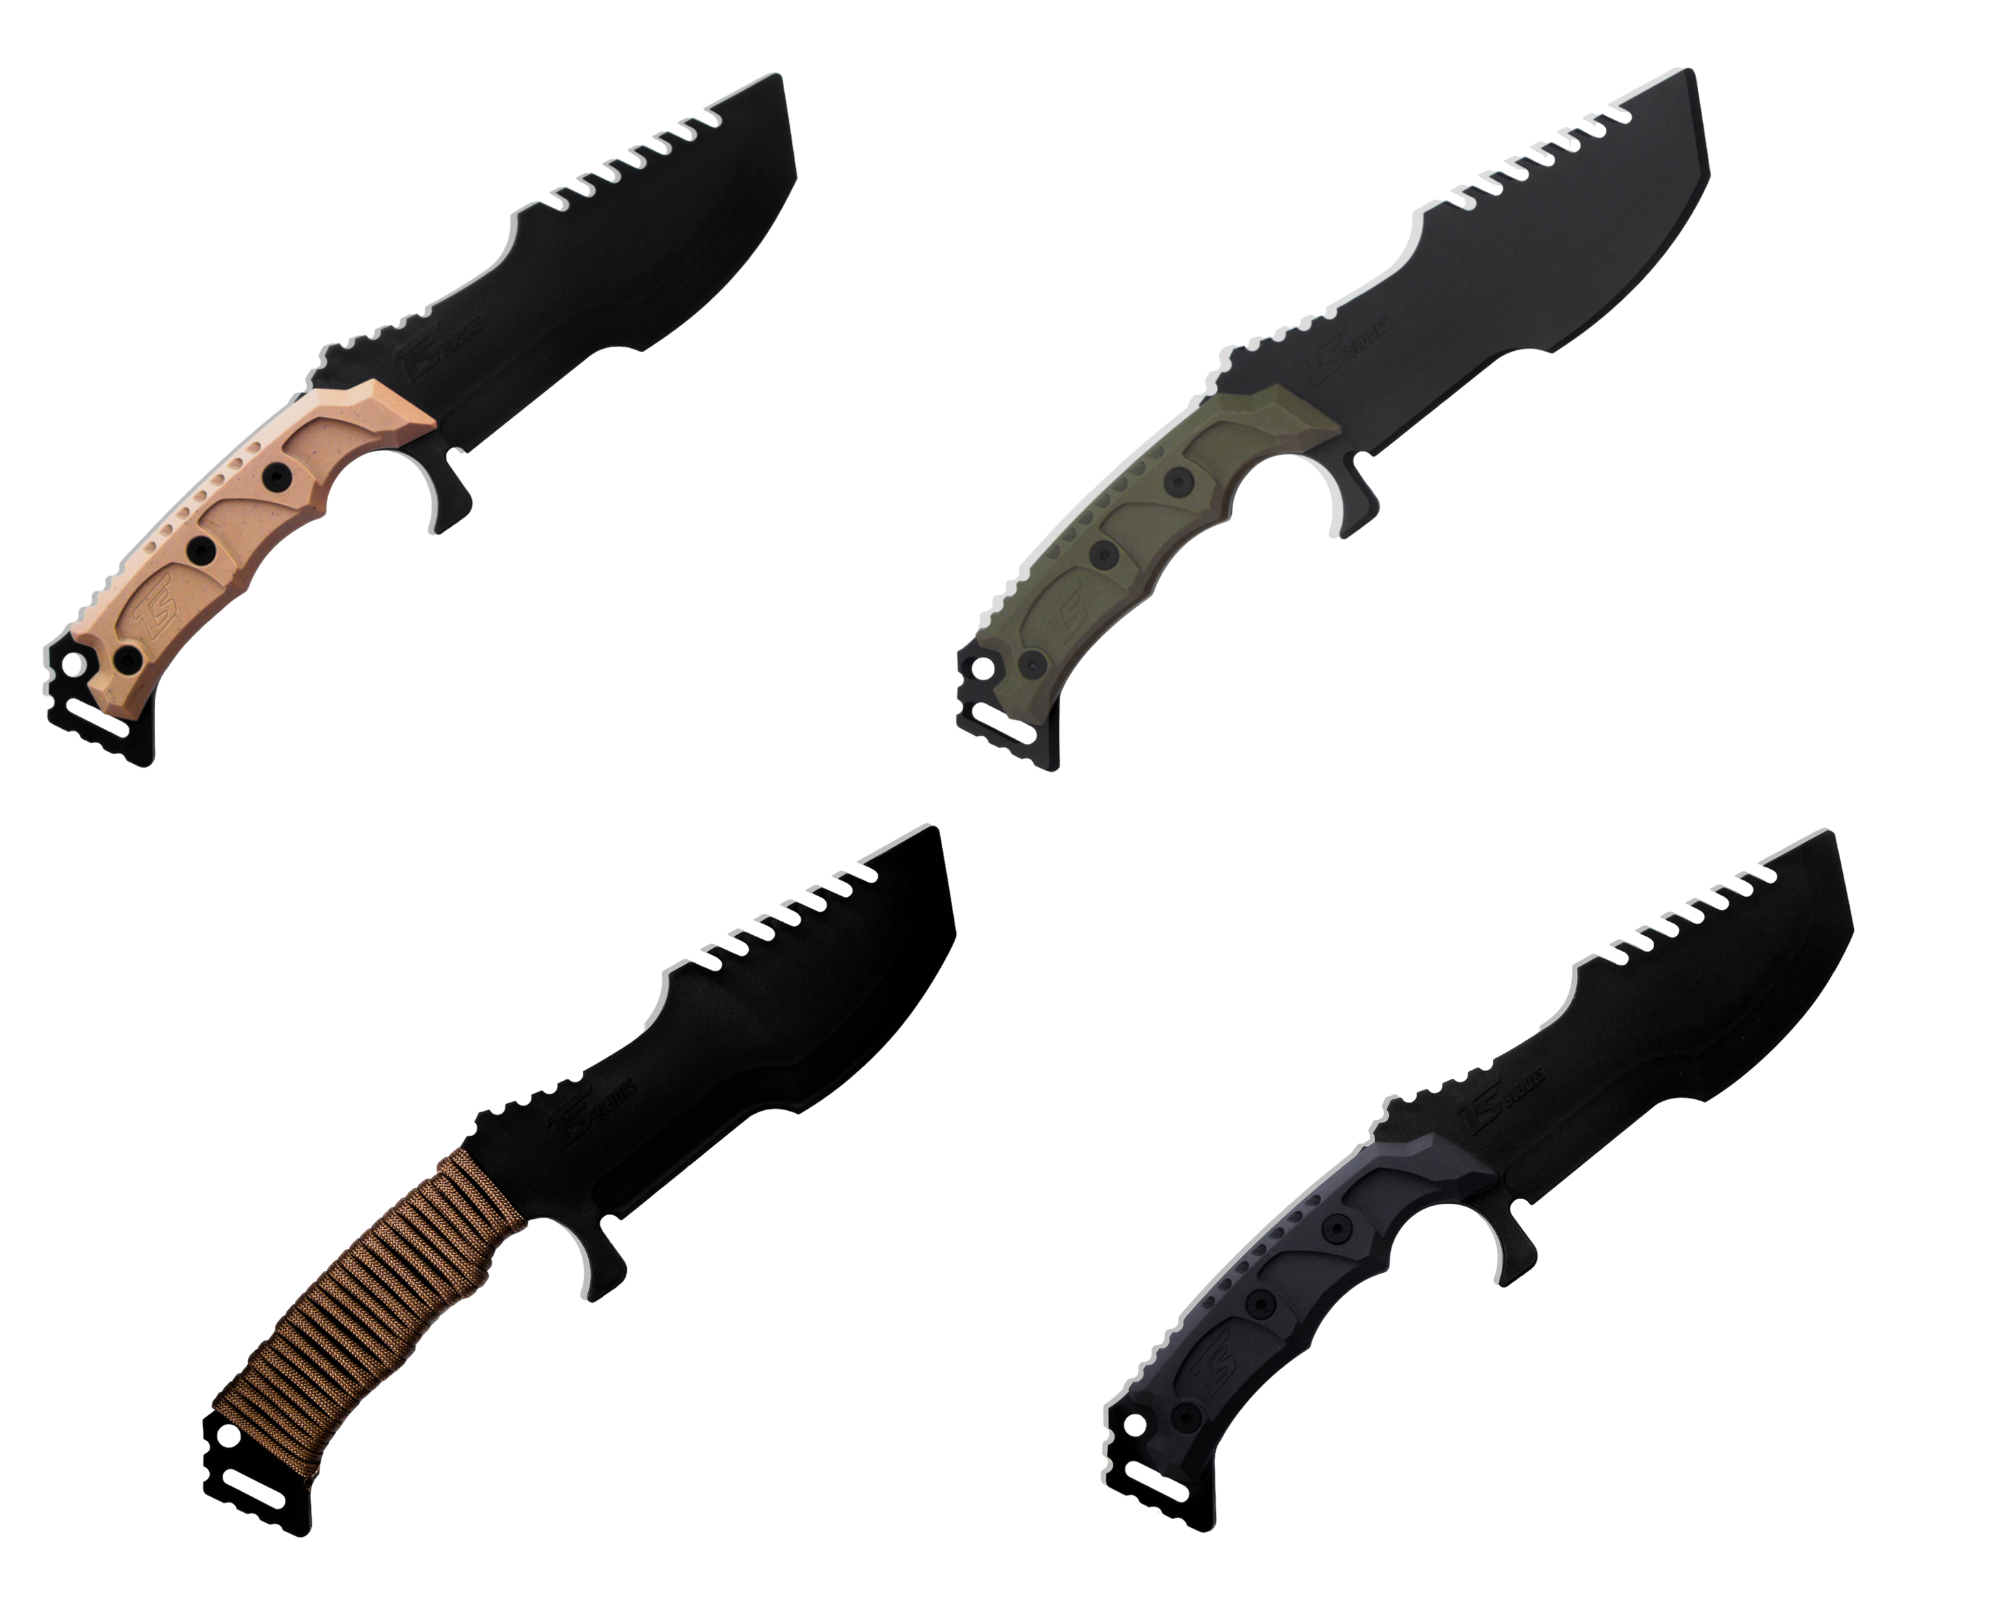 TS Blades Huntsman G3 Training Knife - ssairsoft.com